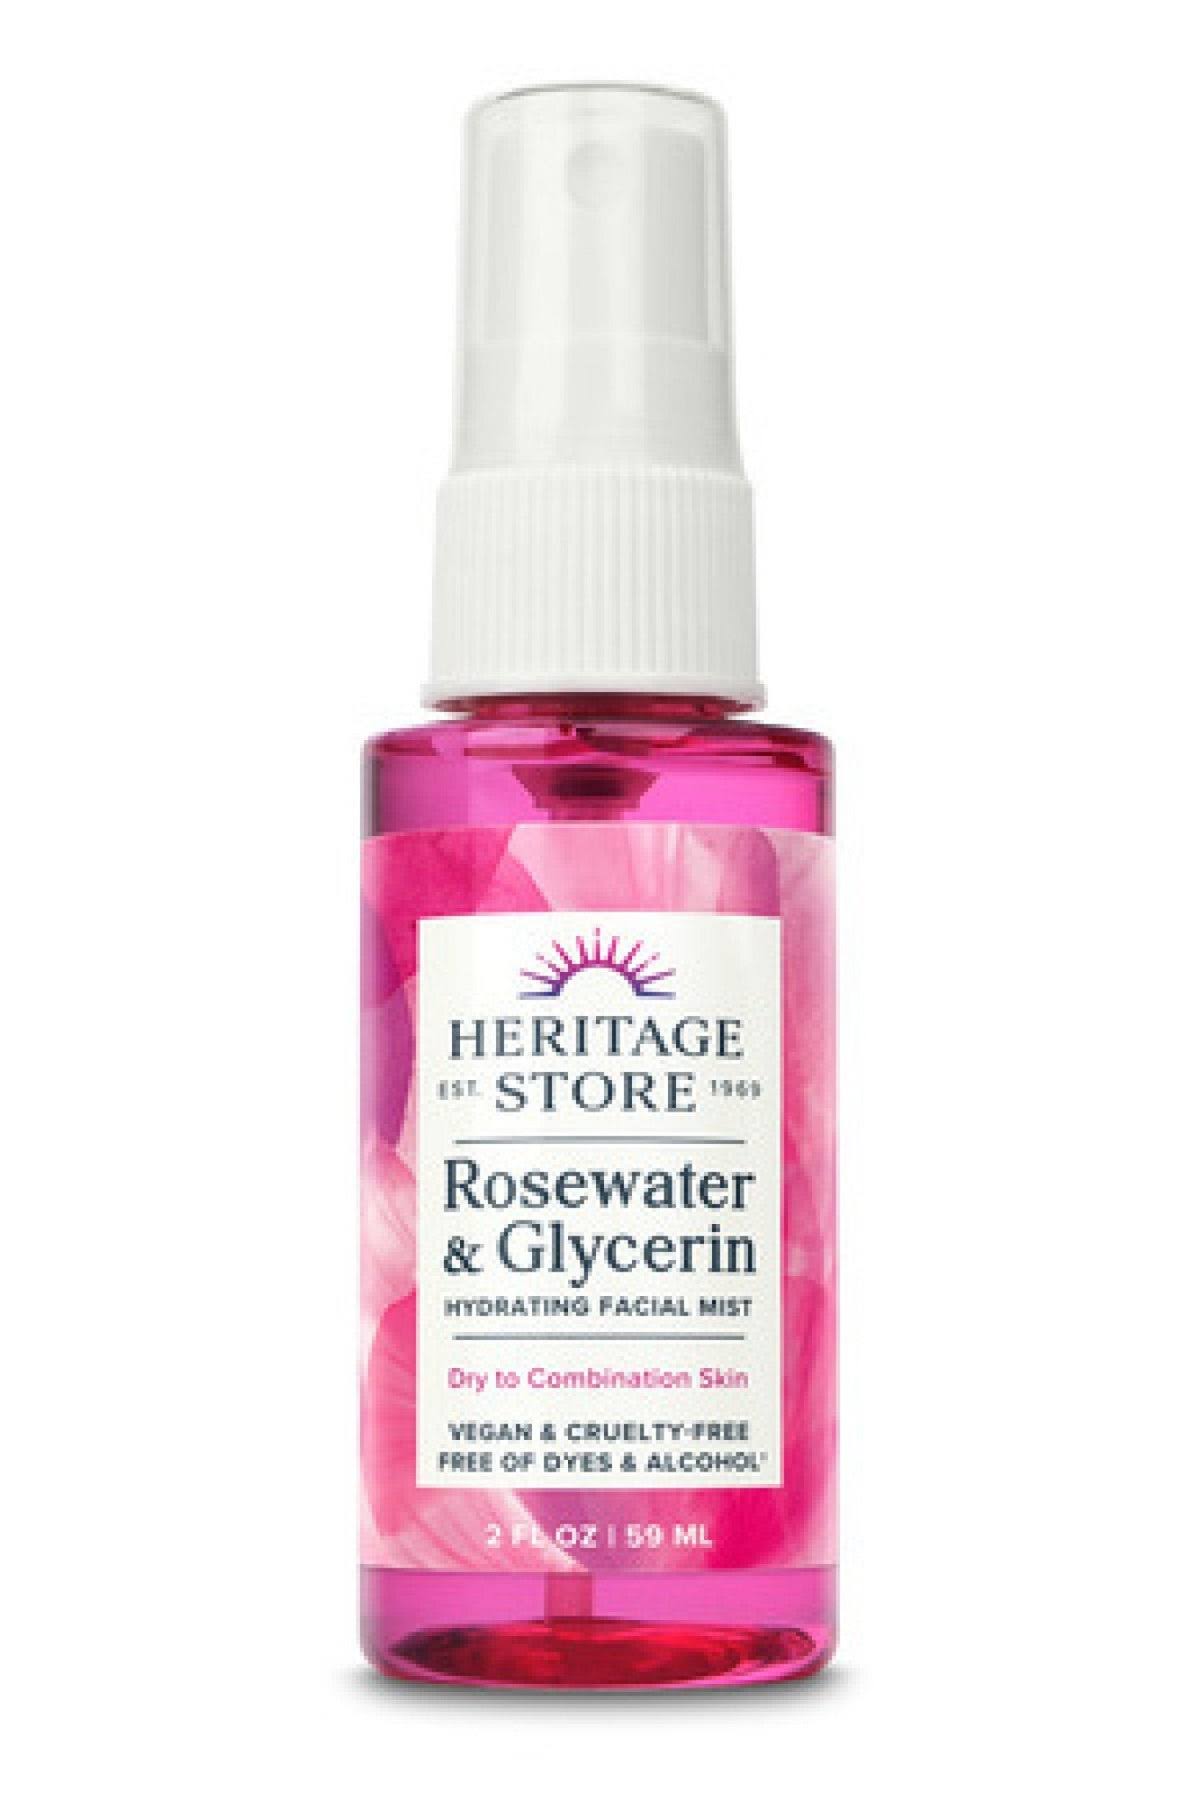 Heritage Store Rosewater & Glycerin - 2 fl oz